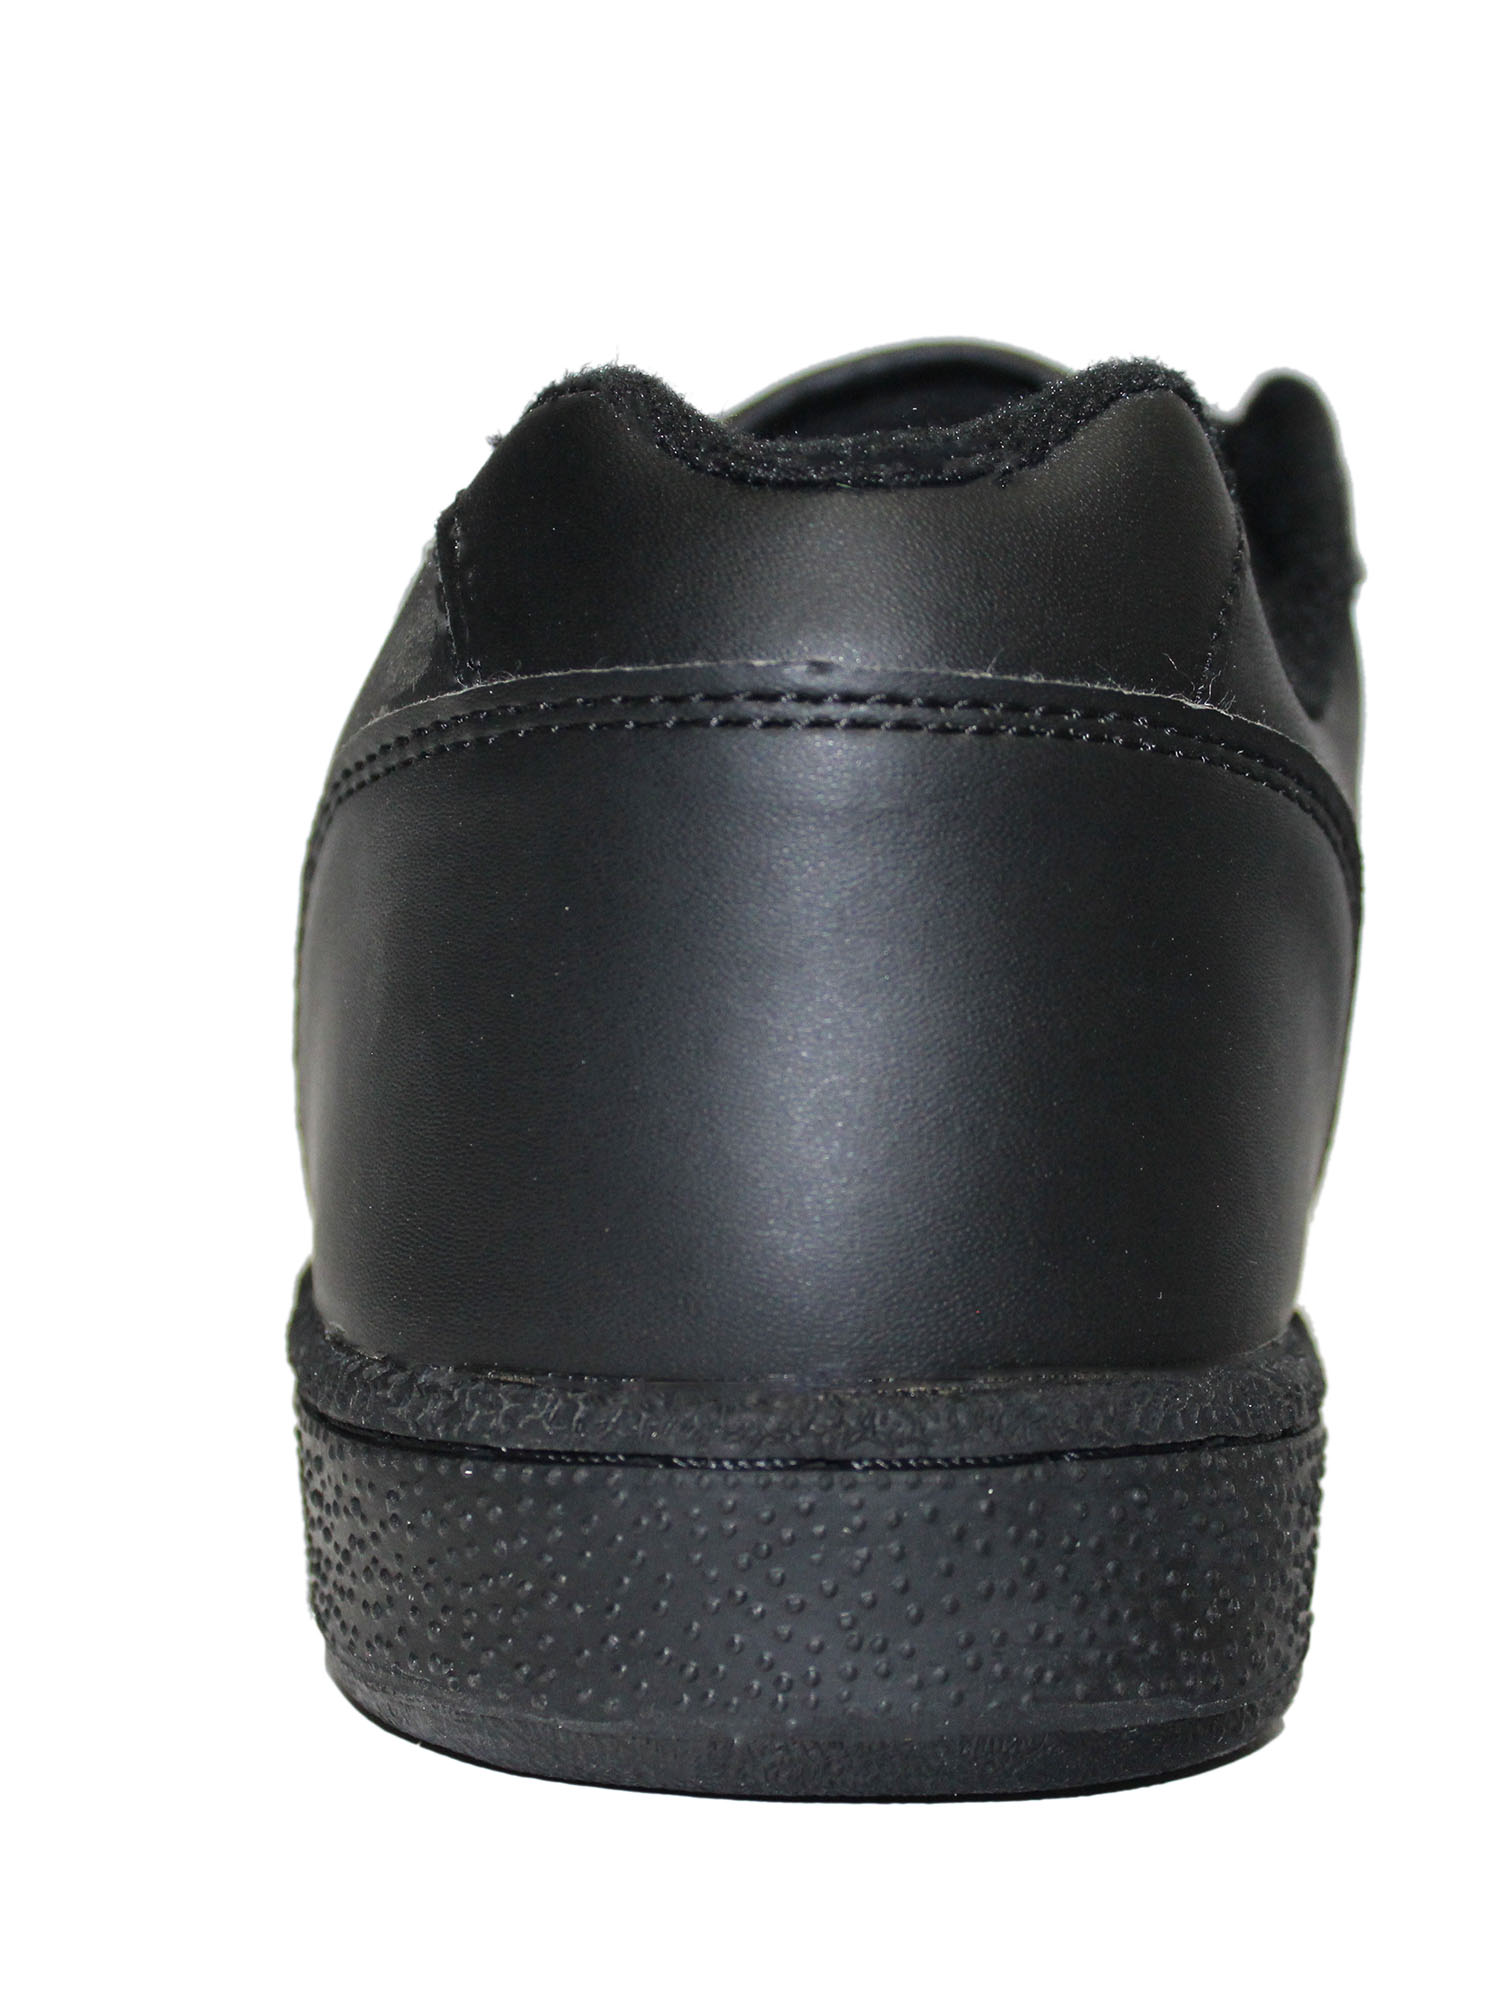 Tanleewa Men's Leather Strap Sneakers Lightweight Hook and Loop Walking Shoe Size 7 Adult Male - image 4 of 4